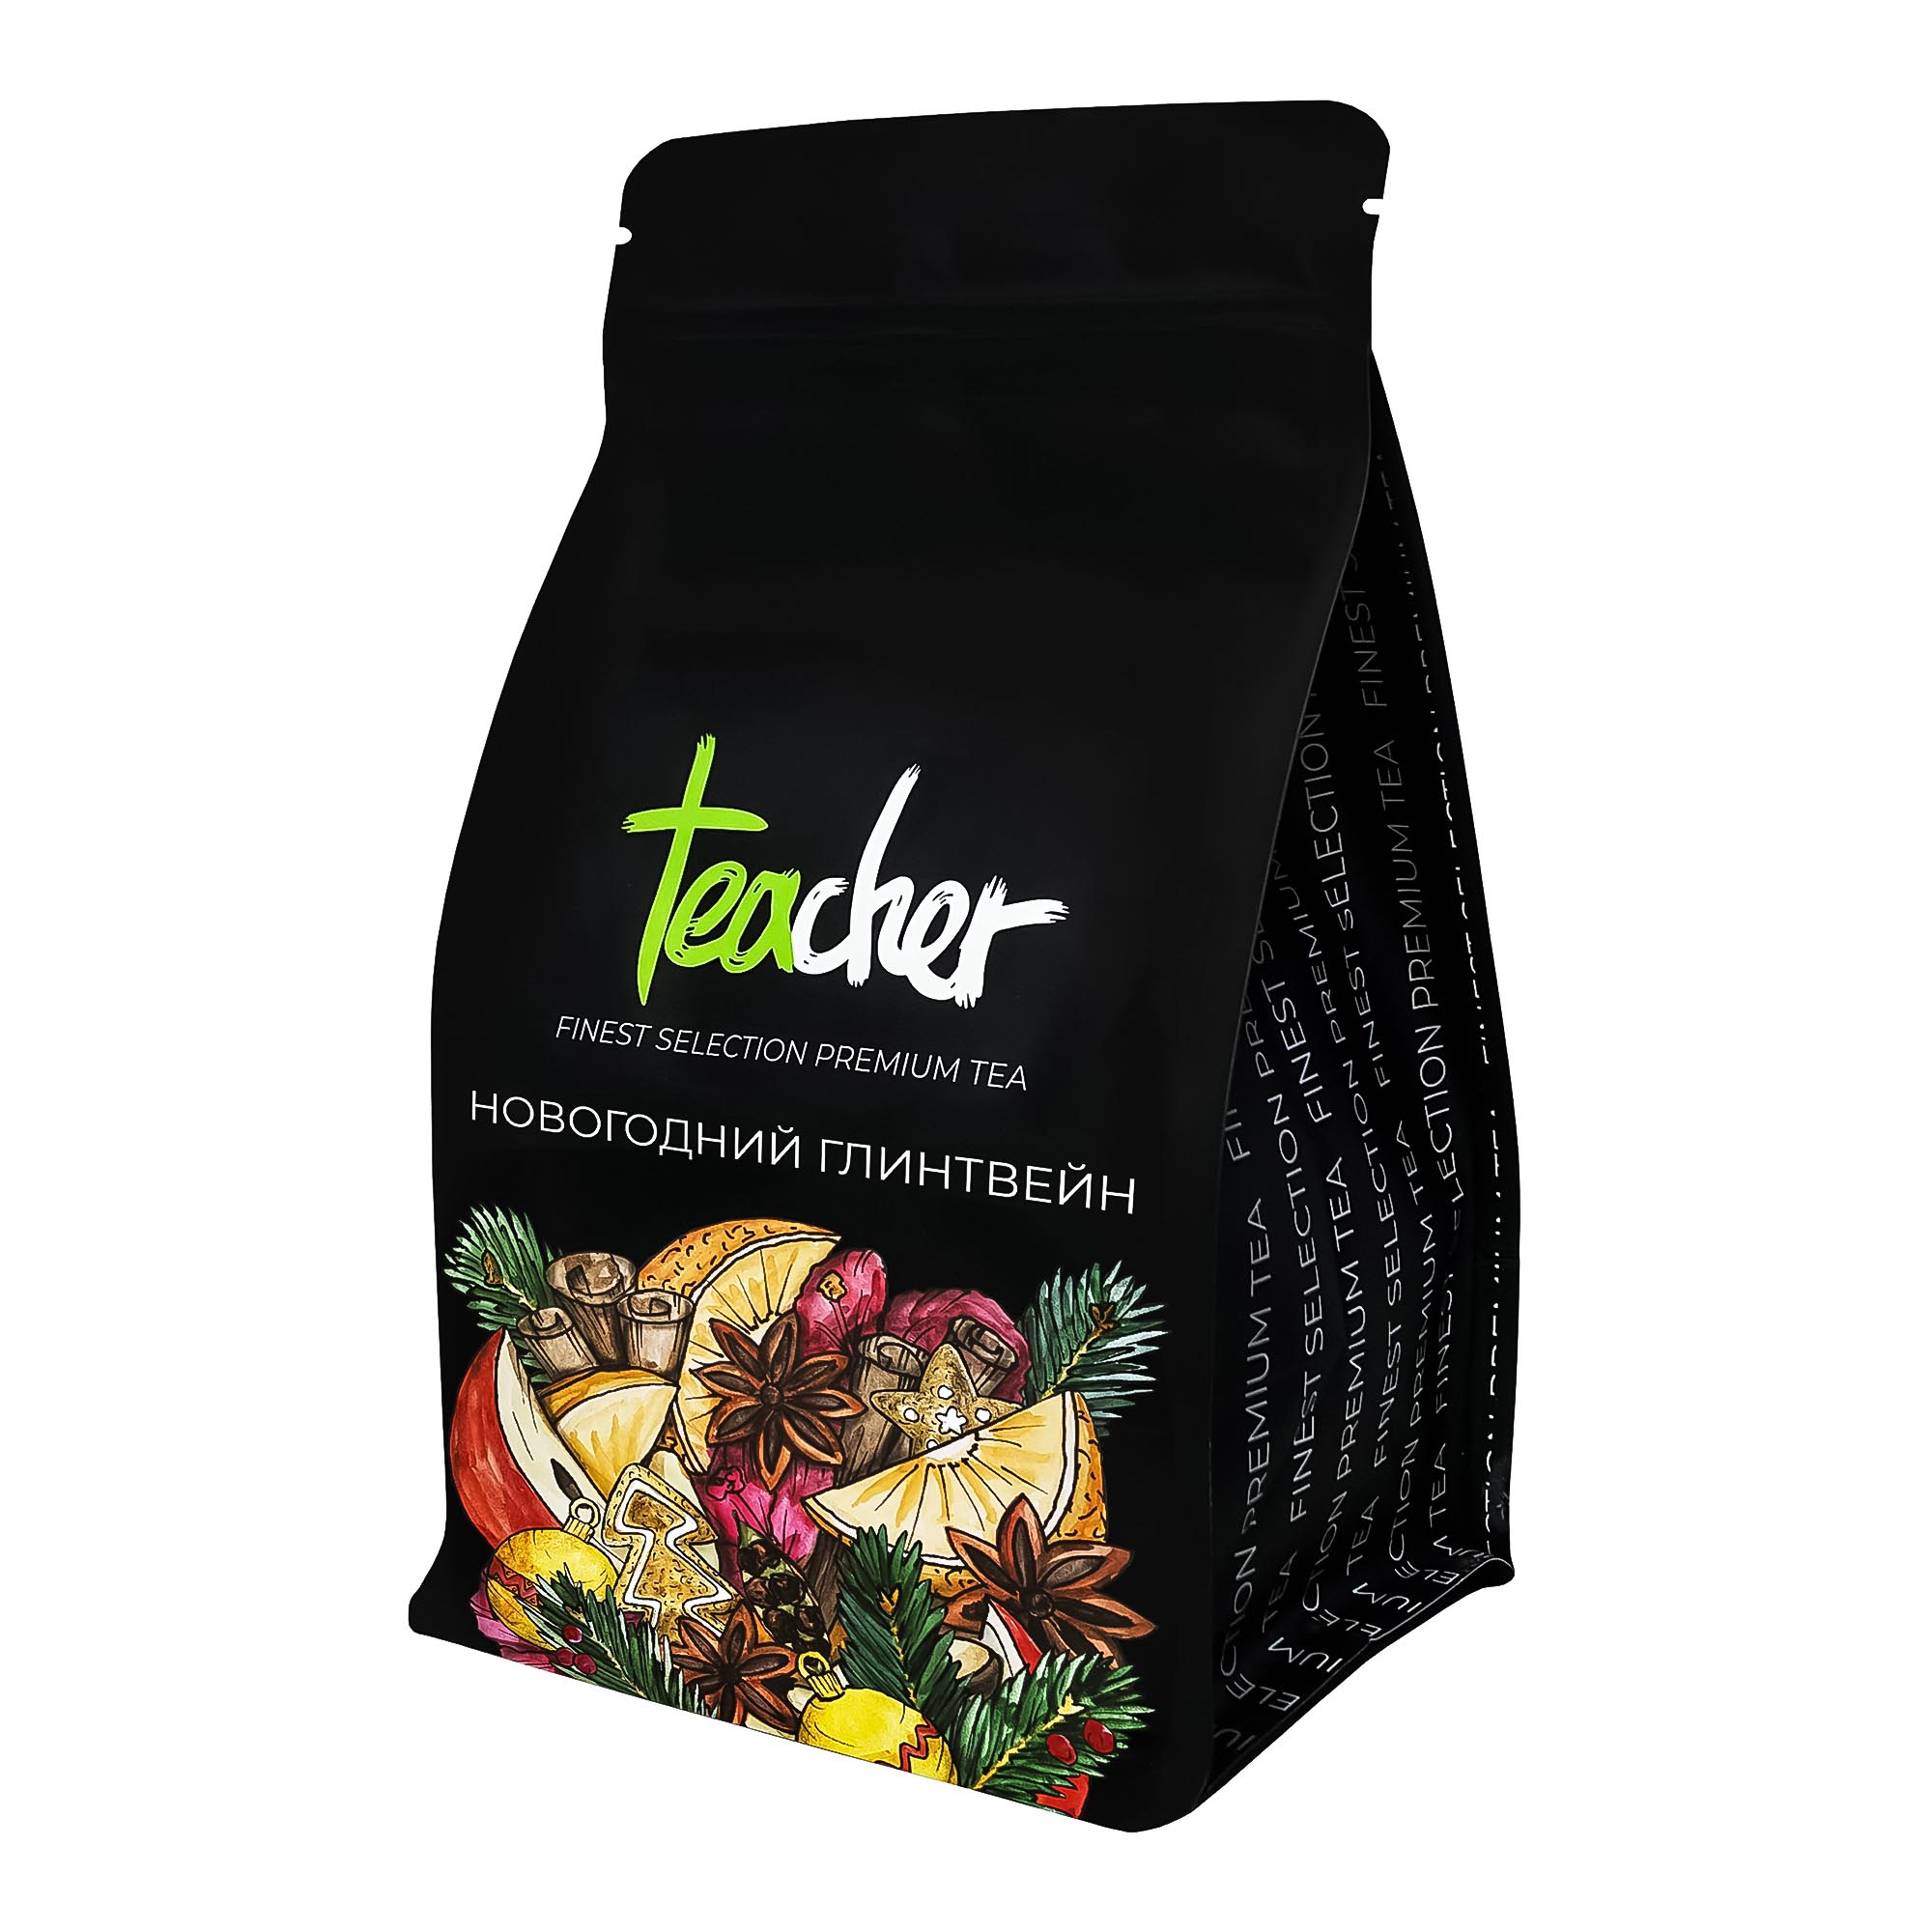 Чай Teacher Новогодний глинтвейн 250 г чай фруктовый глинтвейн премиум 100 г